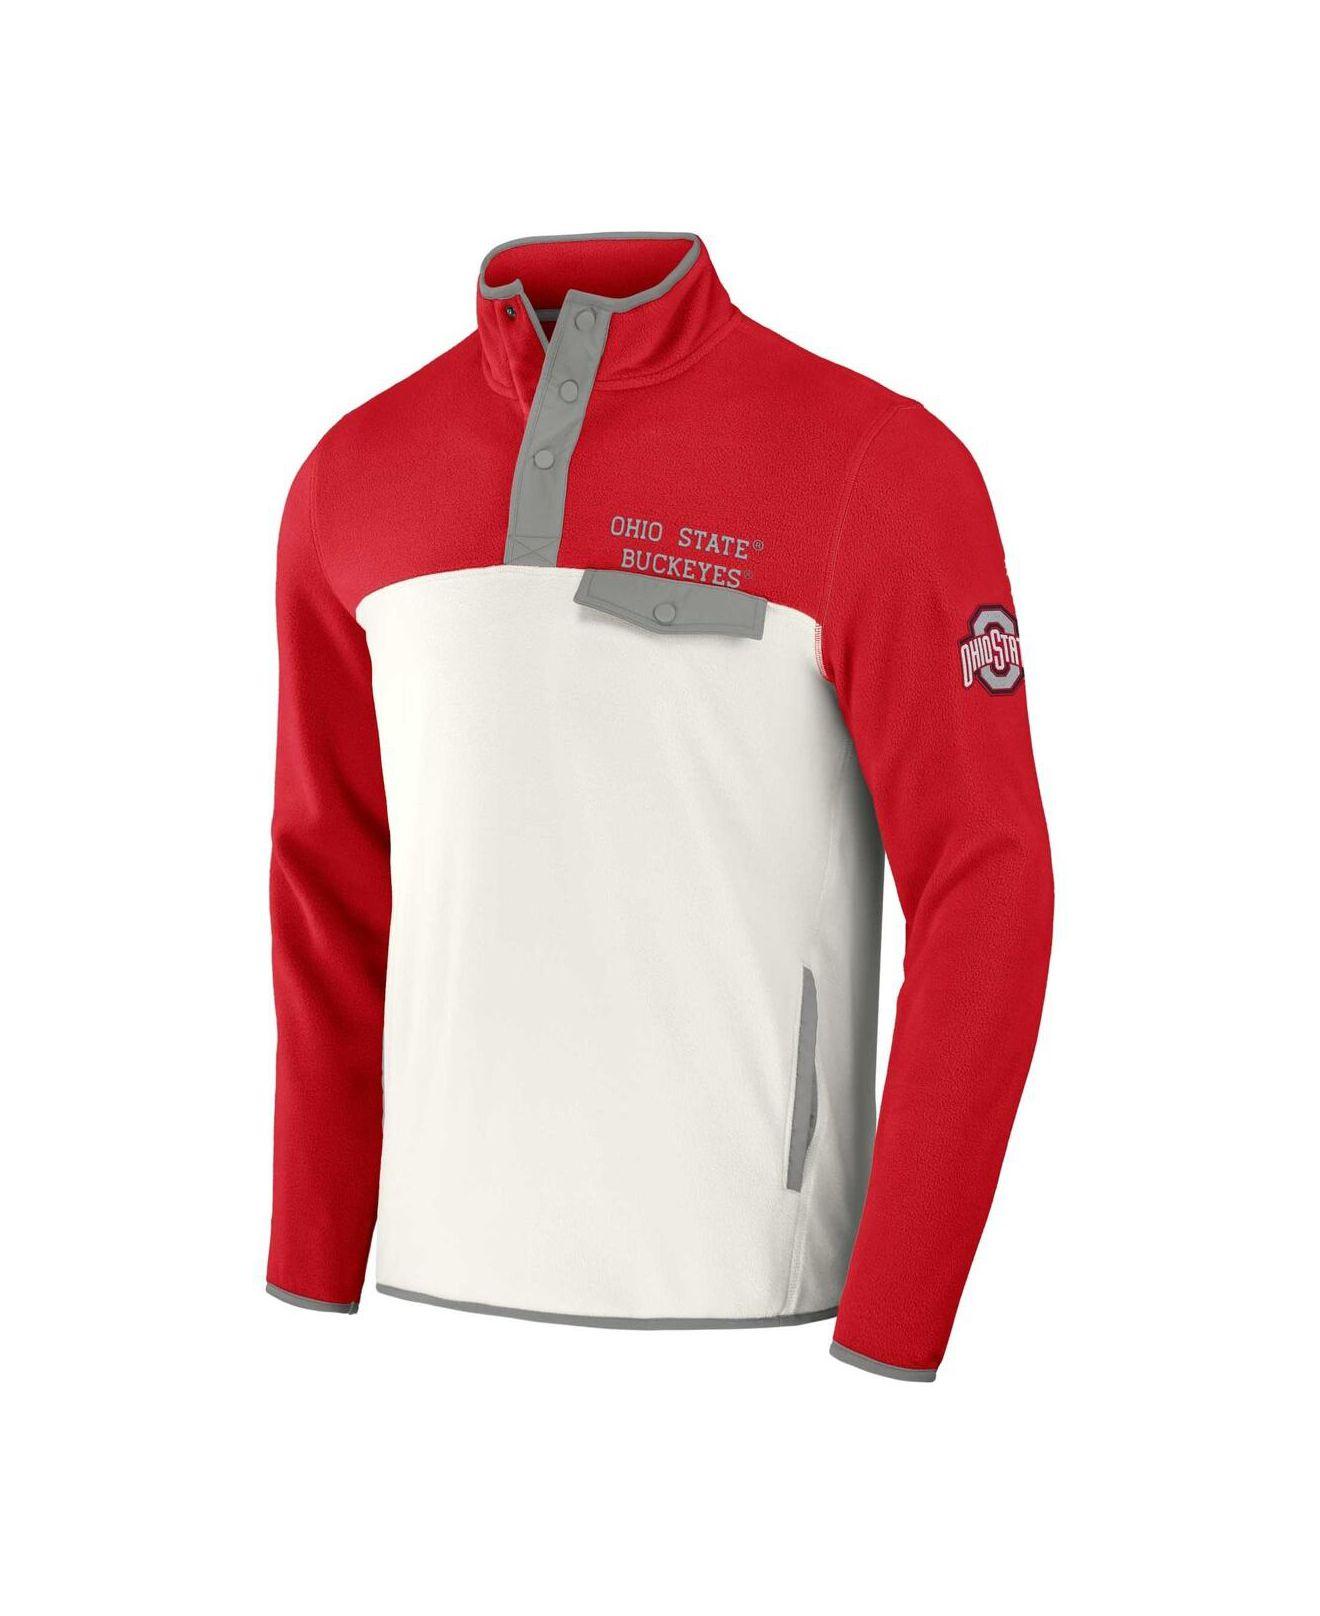 Men's Darius Rucker Collection by Fanatics White/Navy Houston Astros Team Color Raglan T-Shirt Size: Small